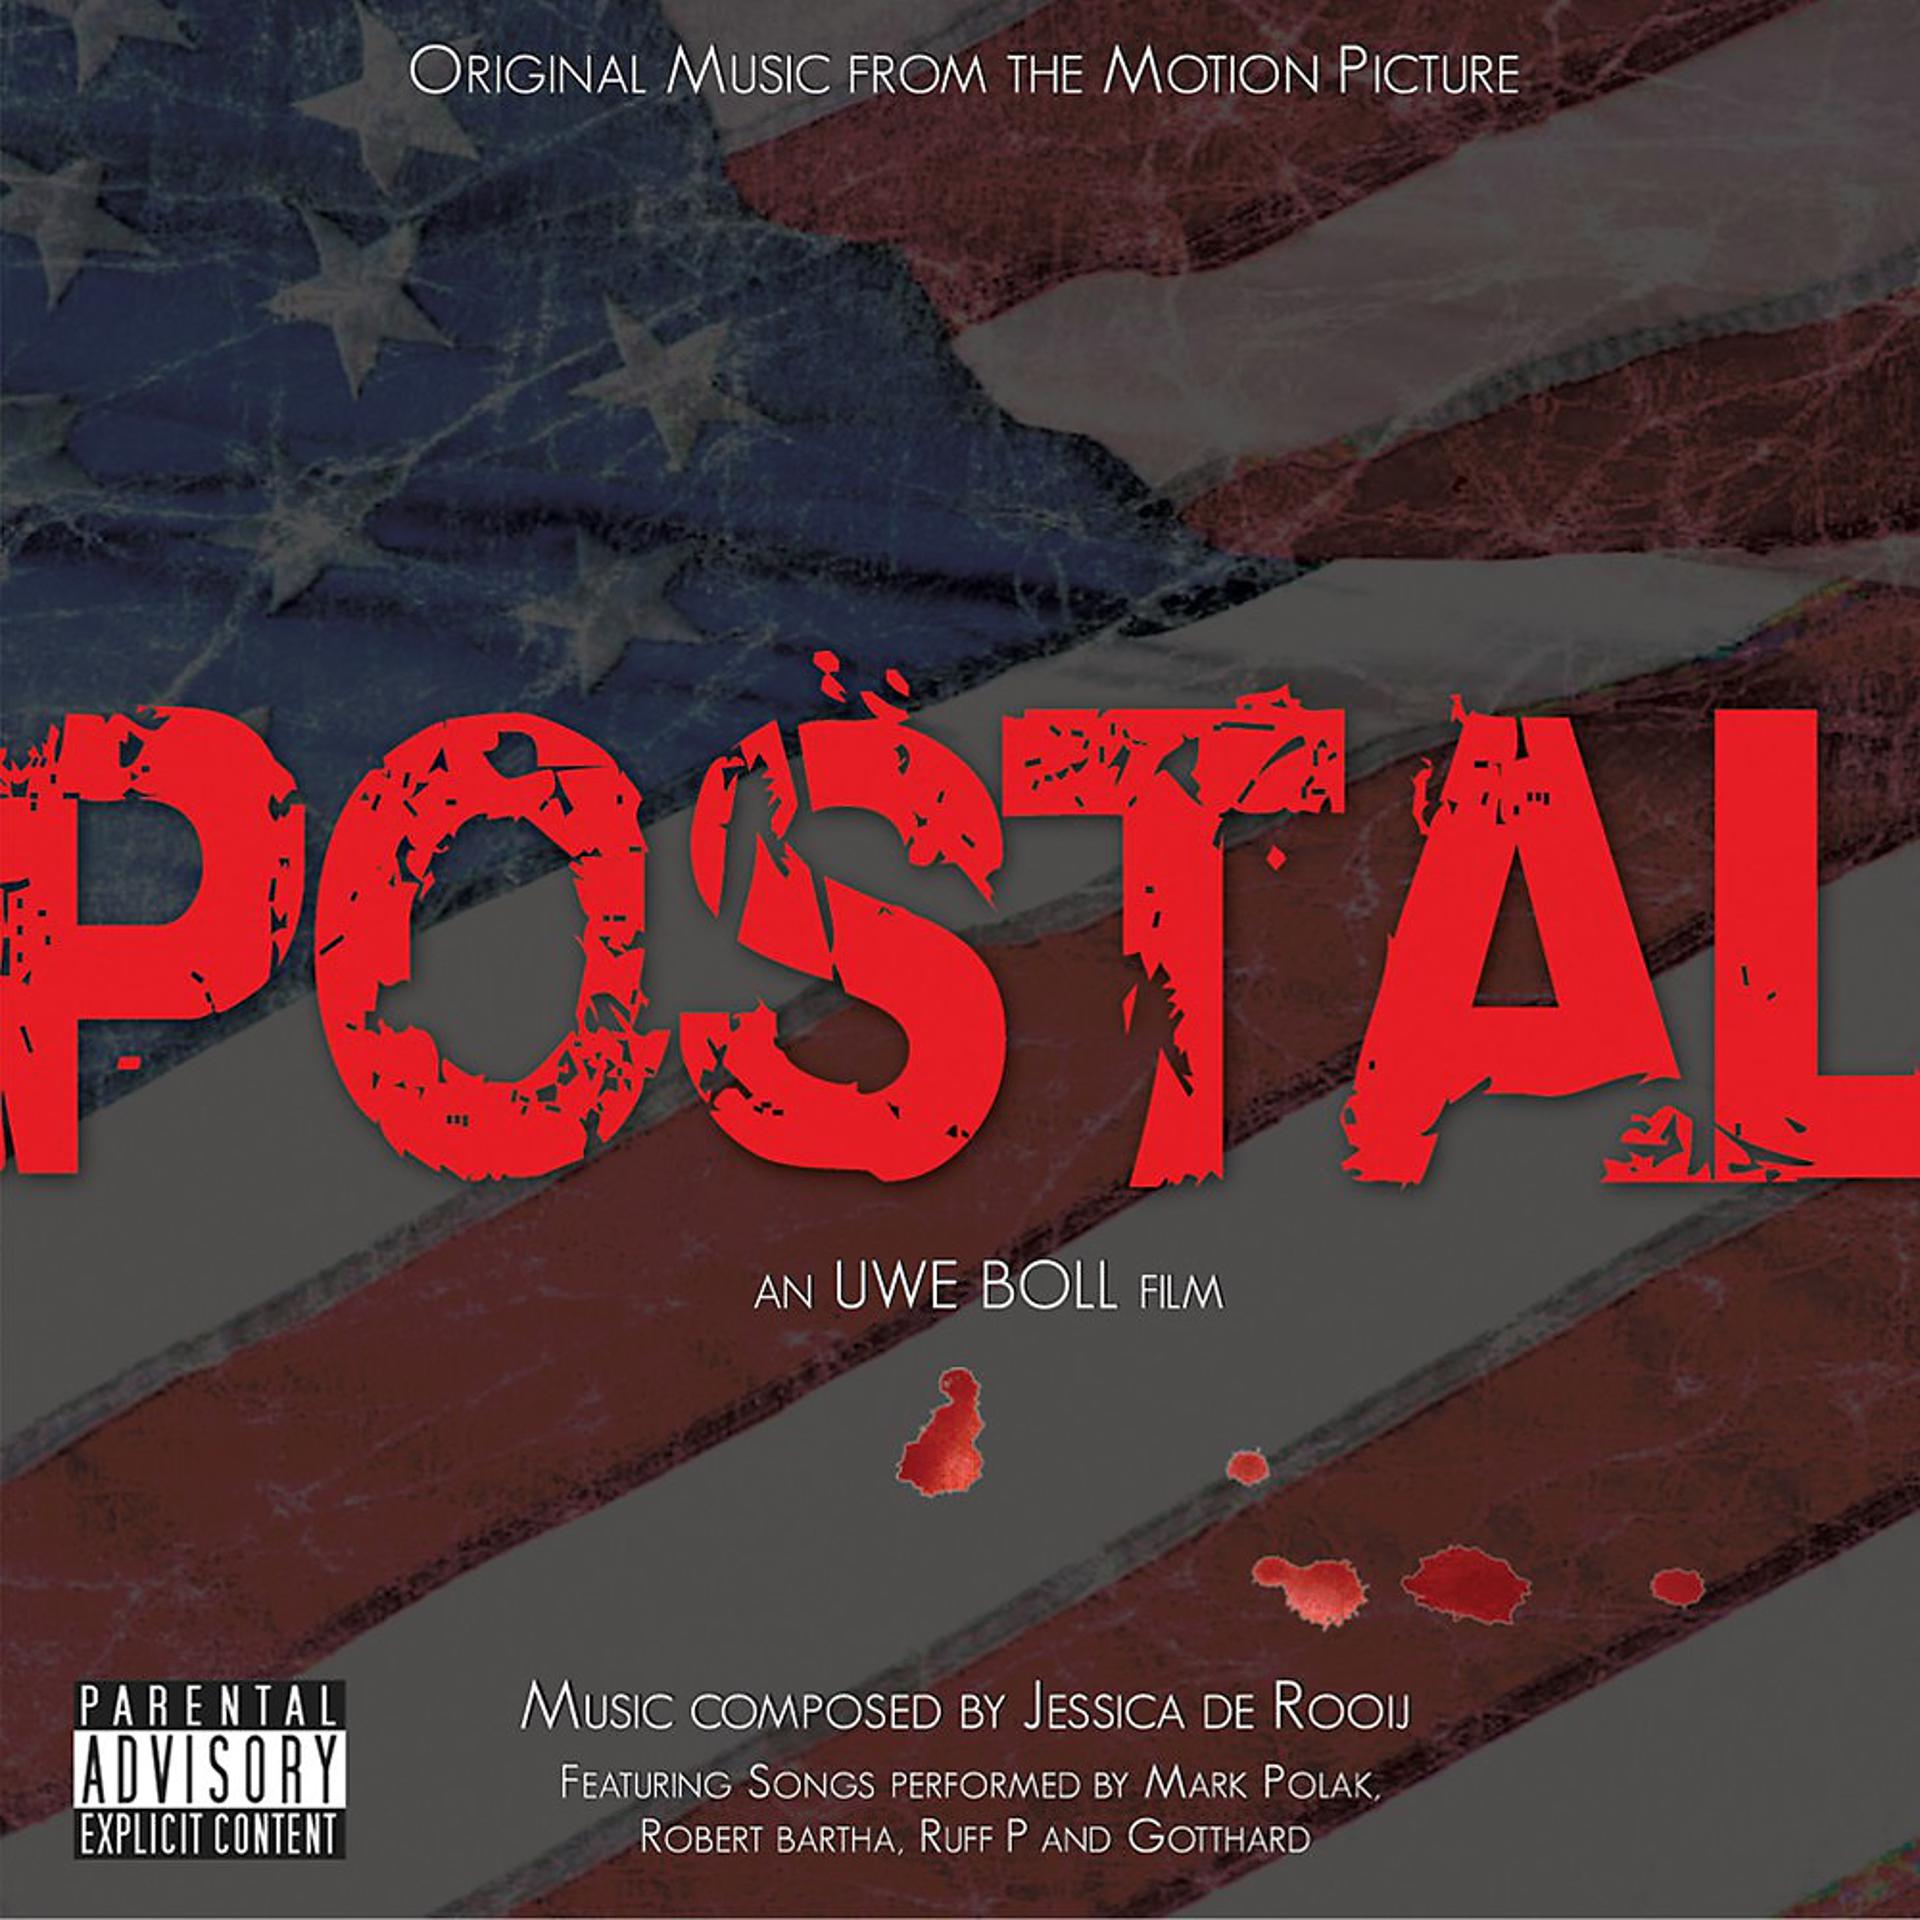 Постер альбома Postal